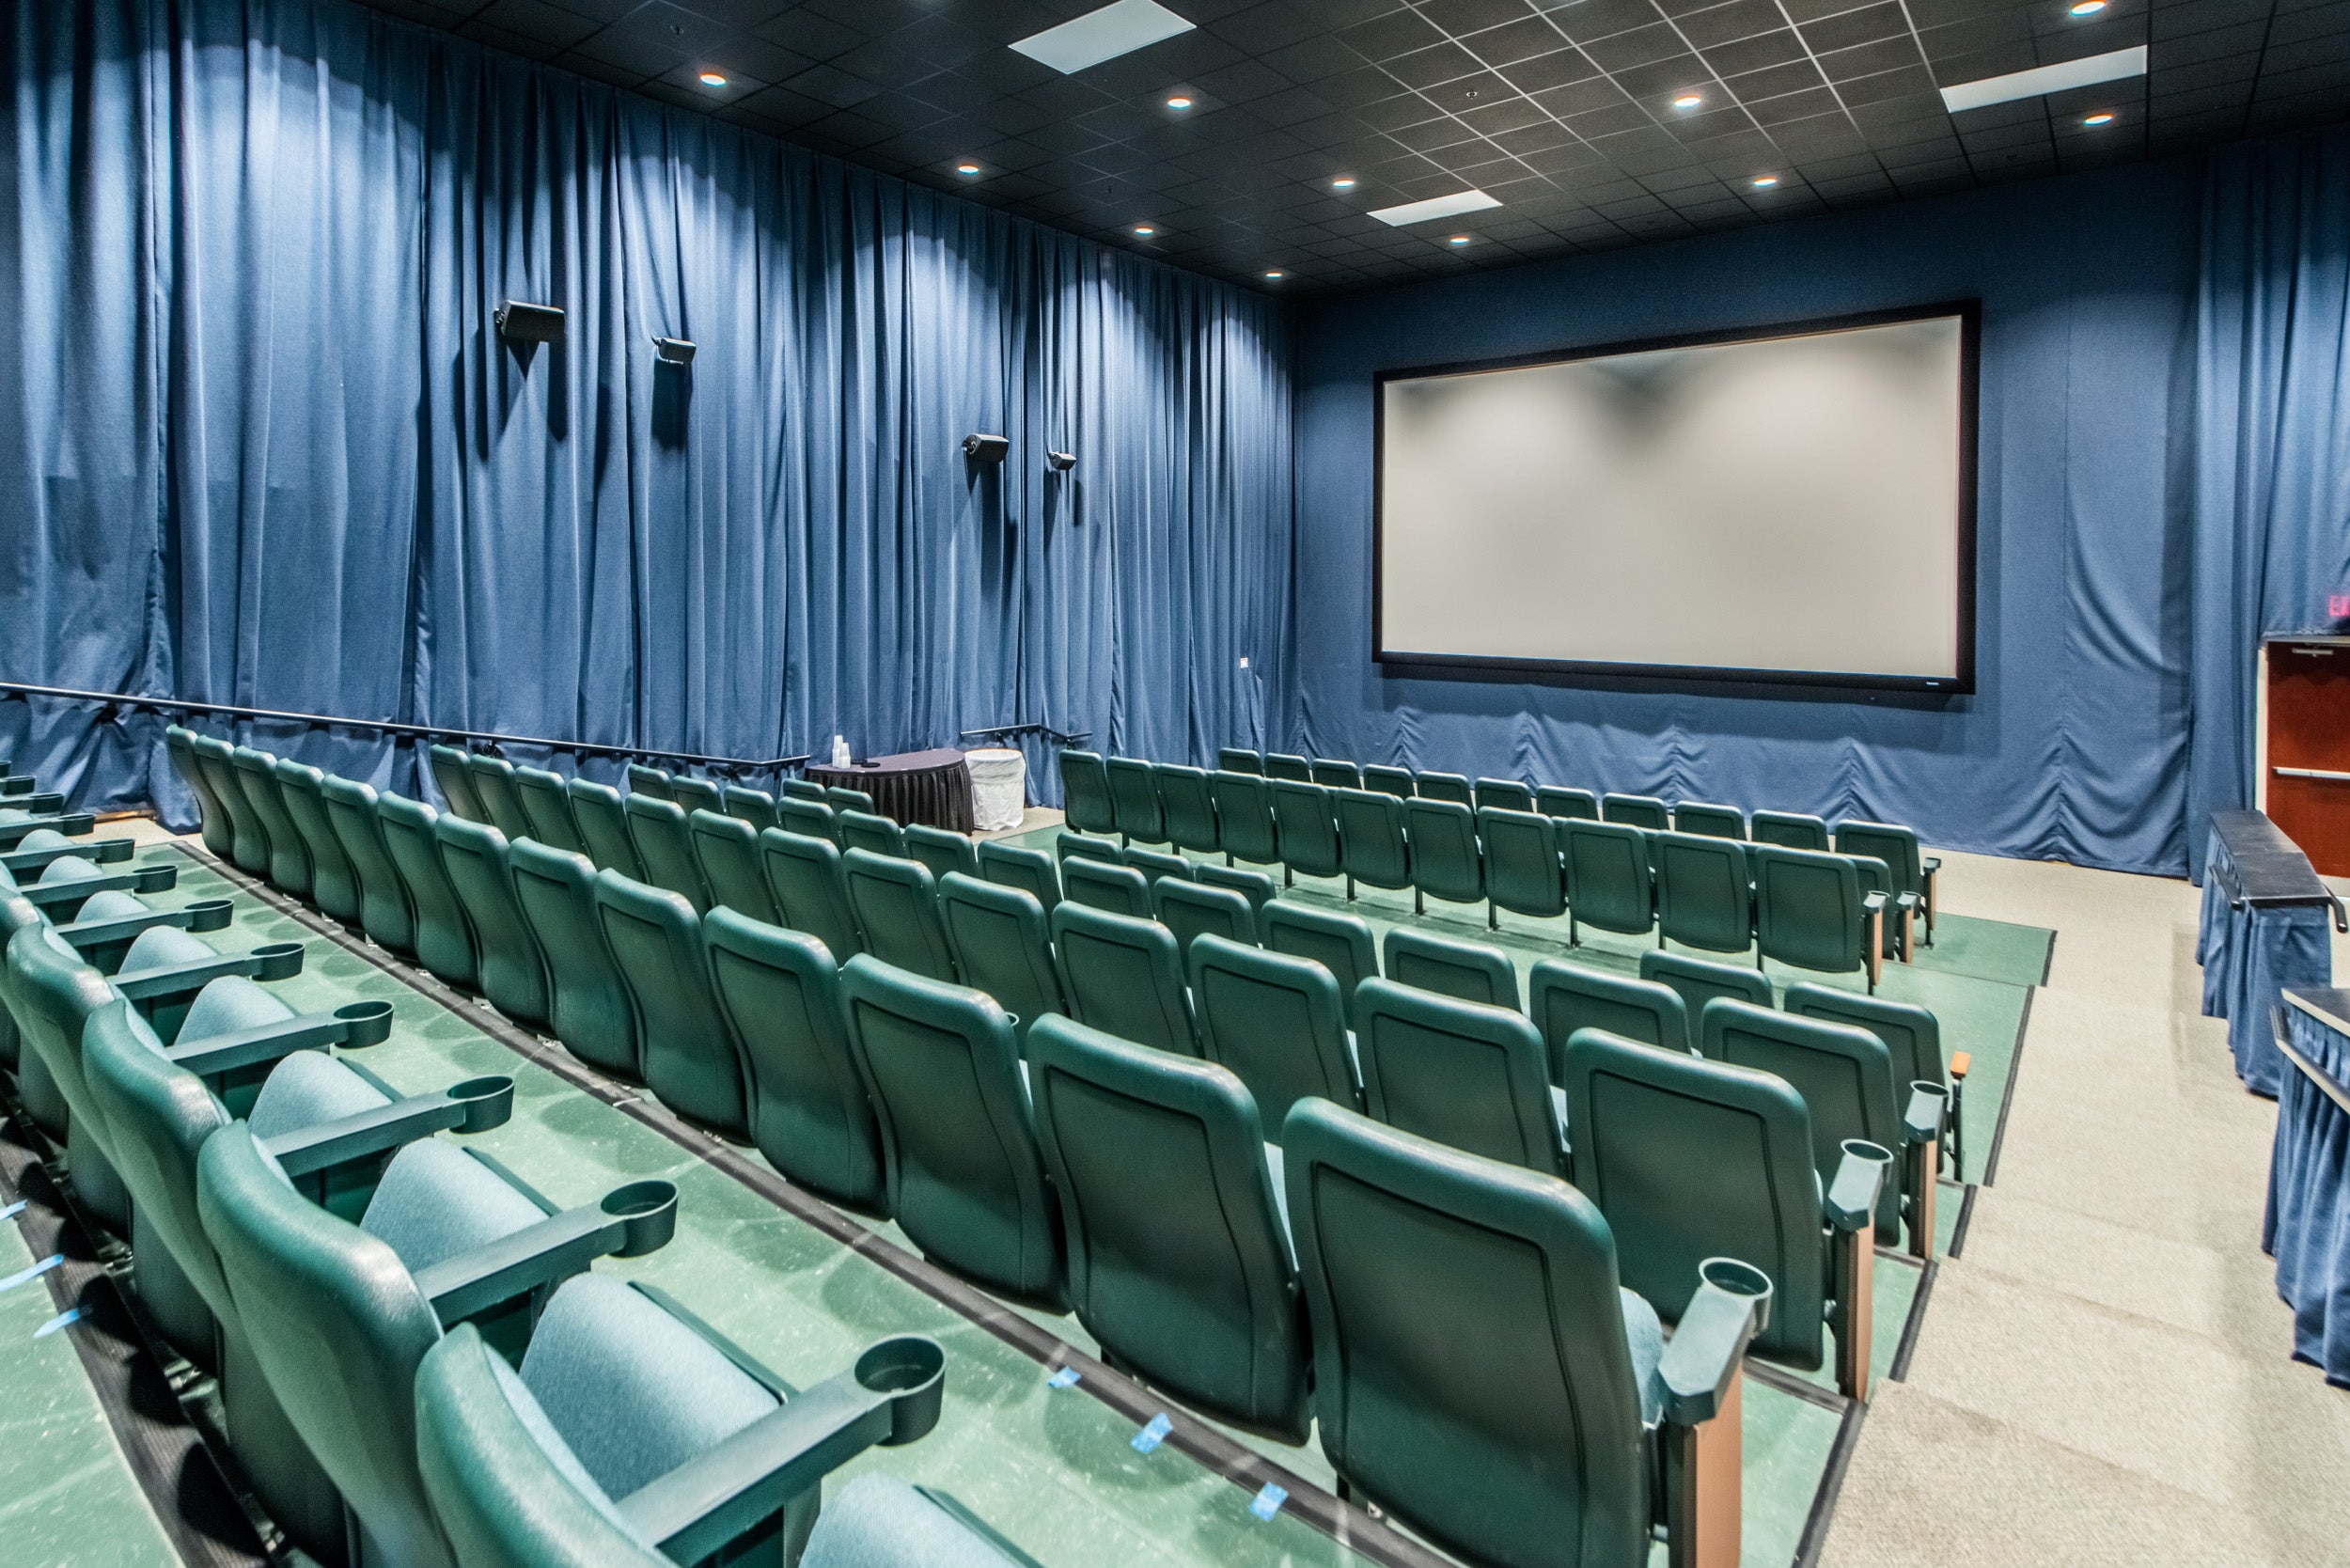 Majestic+Movie+Theater+w%2F+stadium+seating